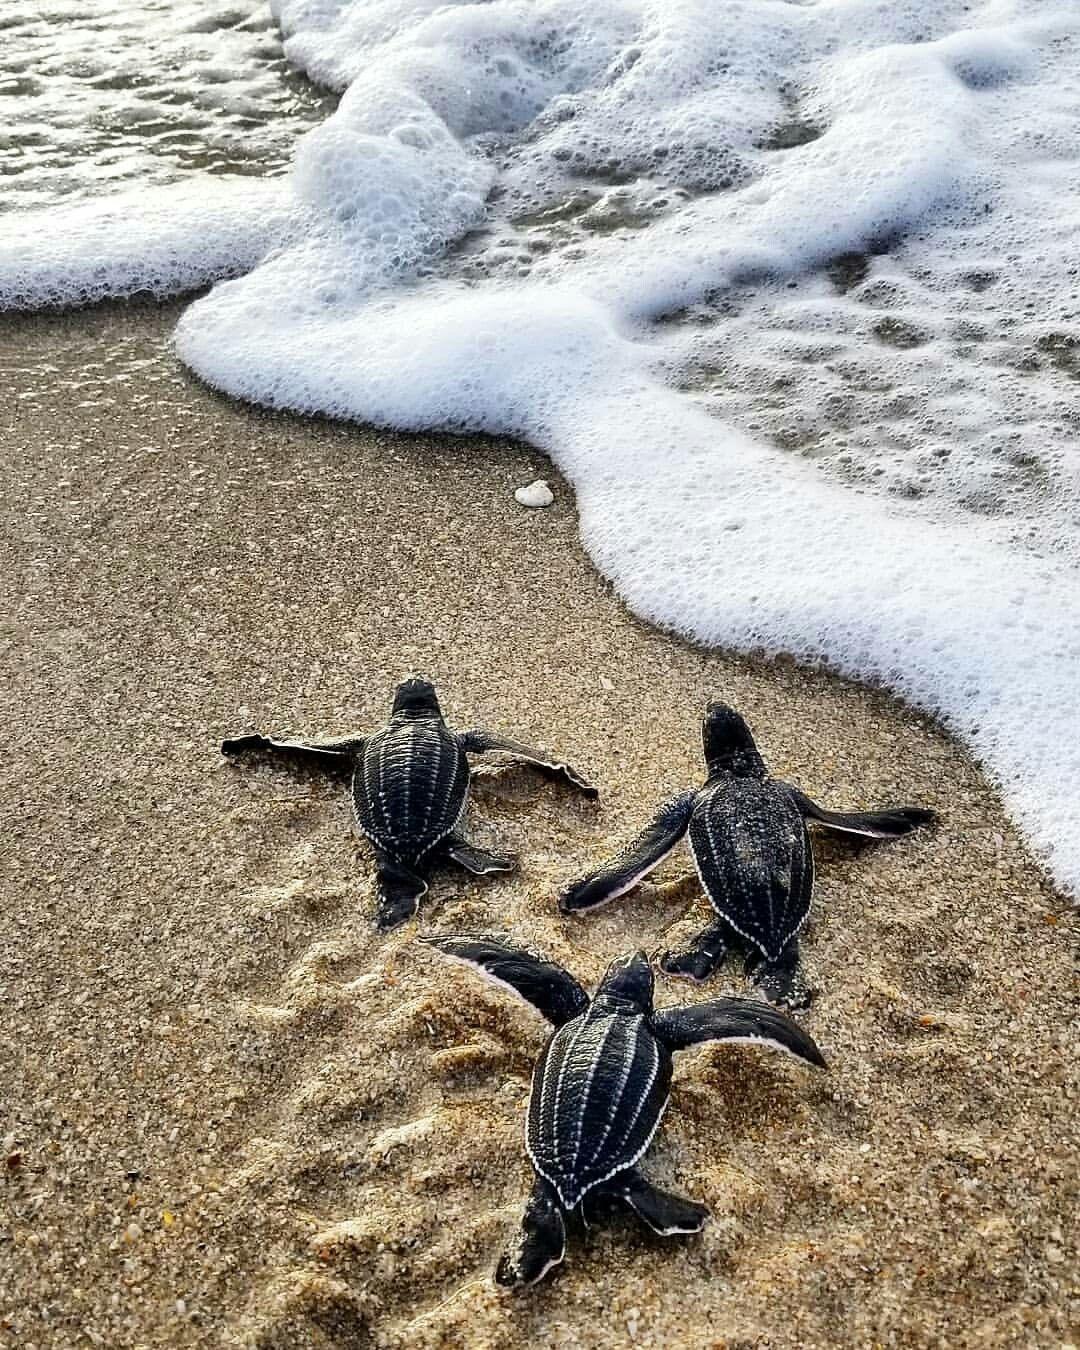 Baby Leatherback Sea Turtles. Turtle Love. Cute baby